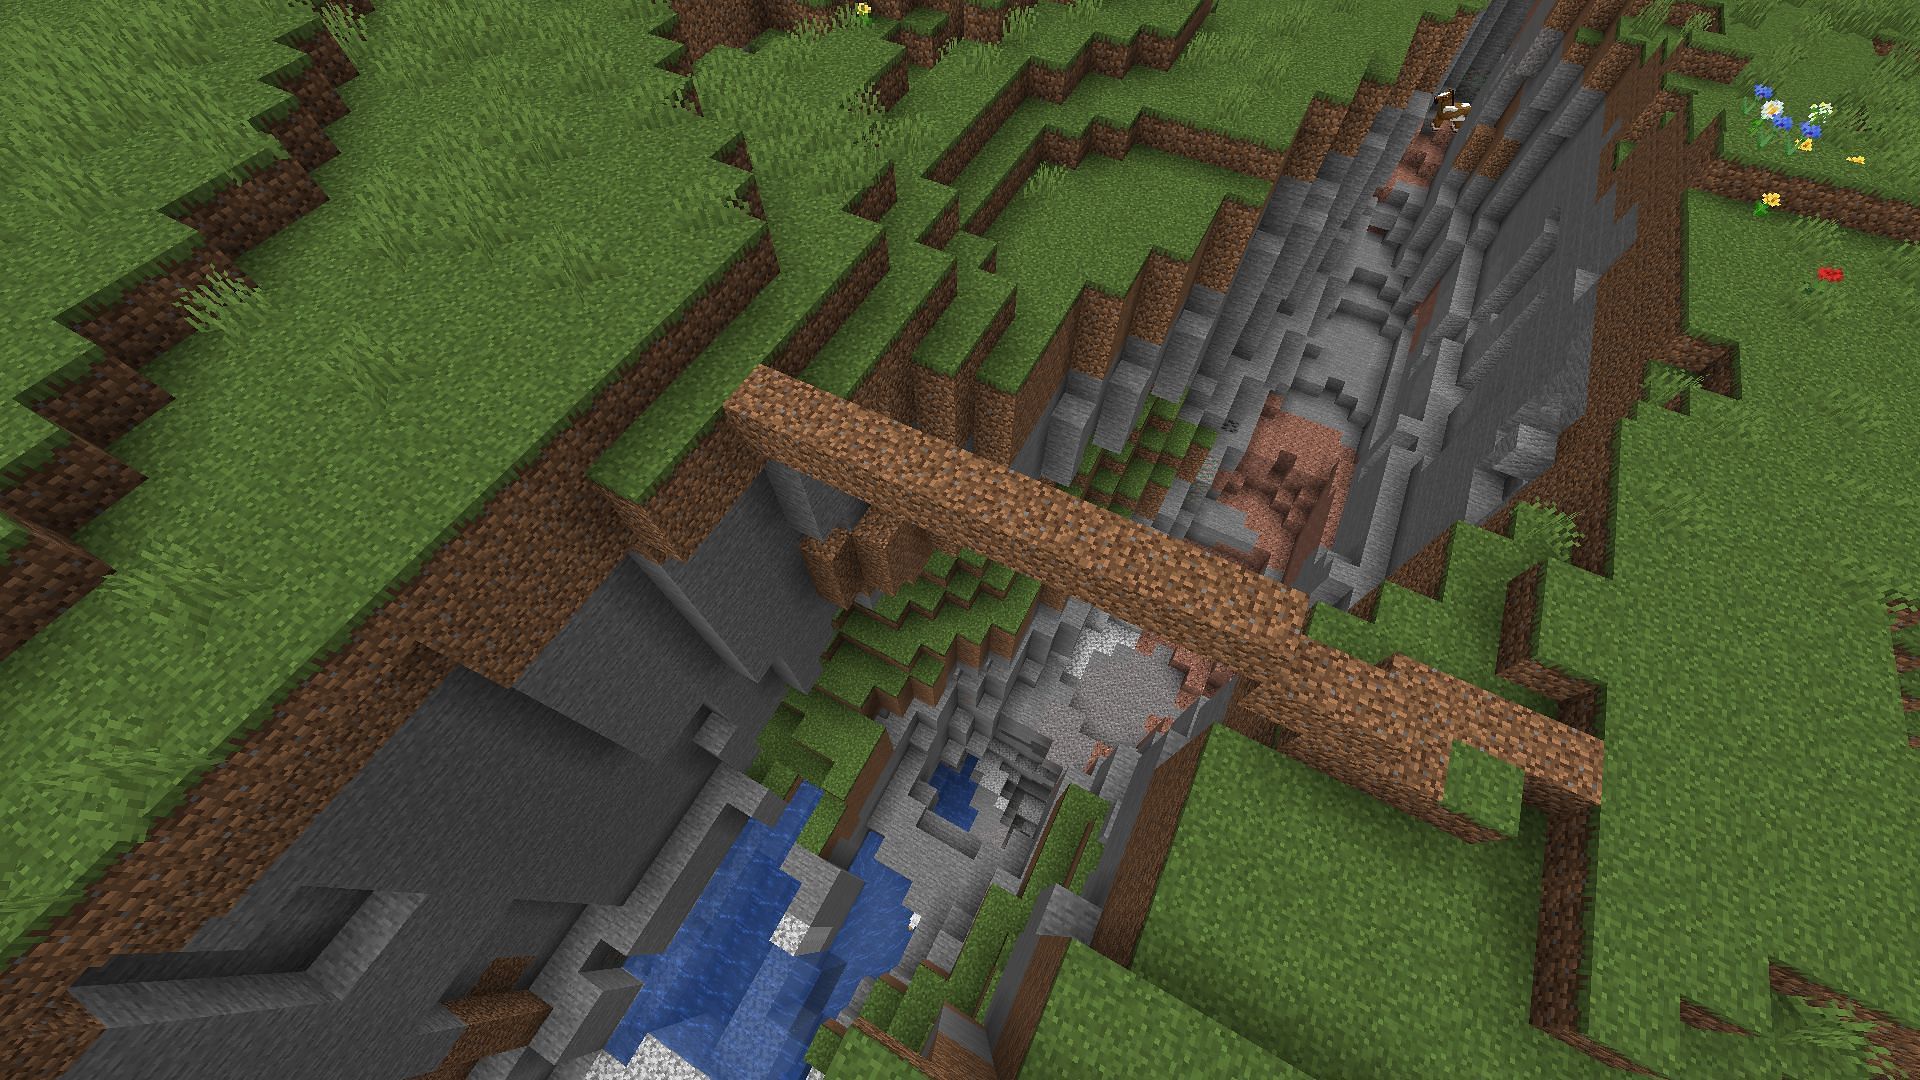 An example of a dangerous bridge over a ravine (Image via Minecraft)